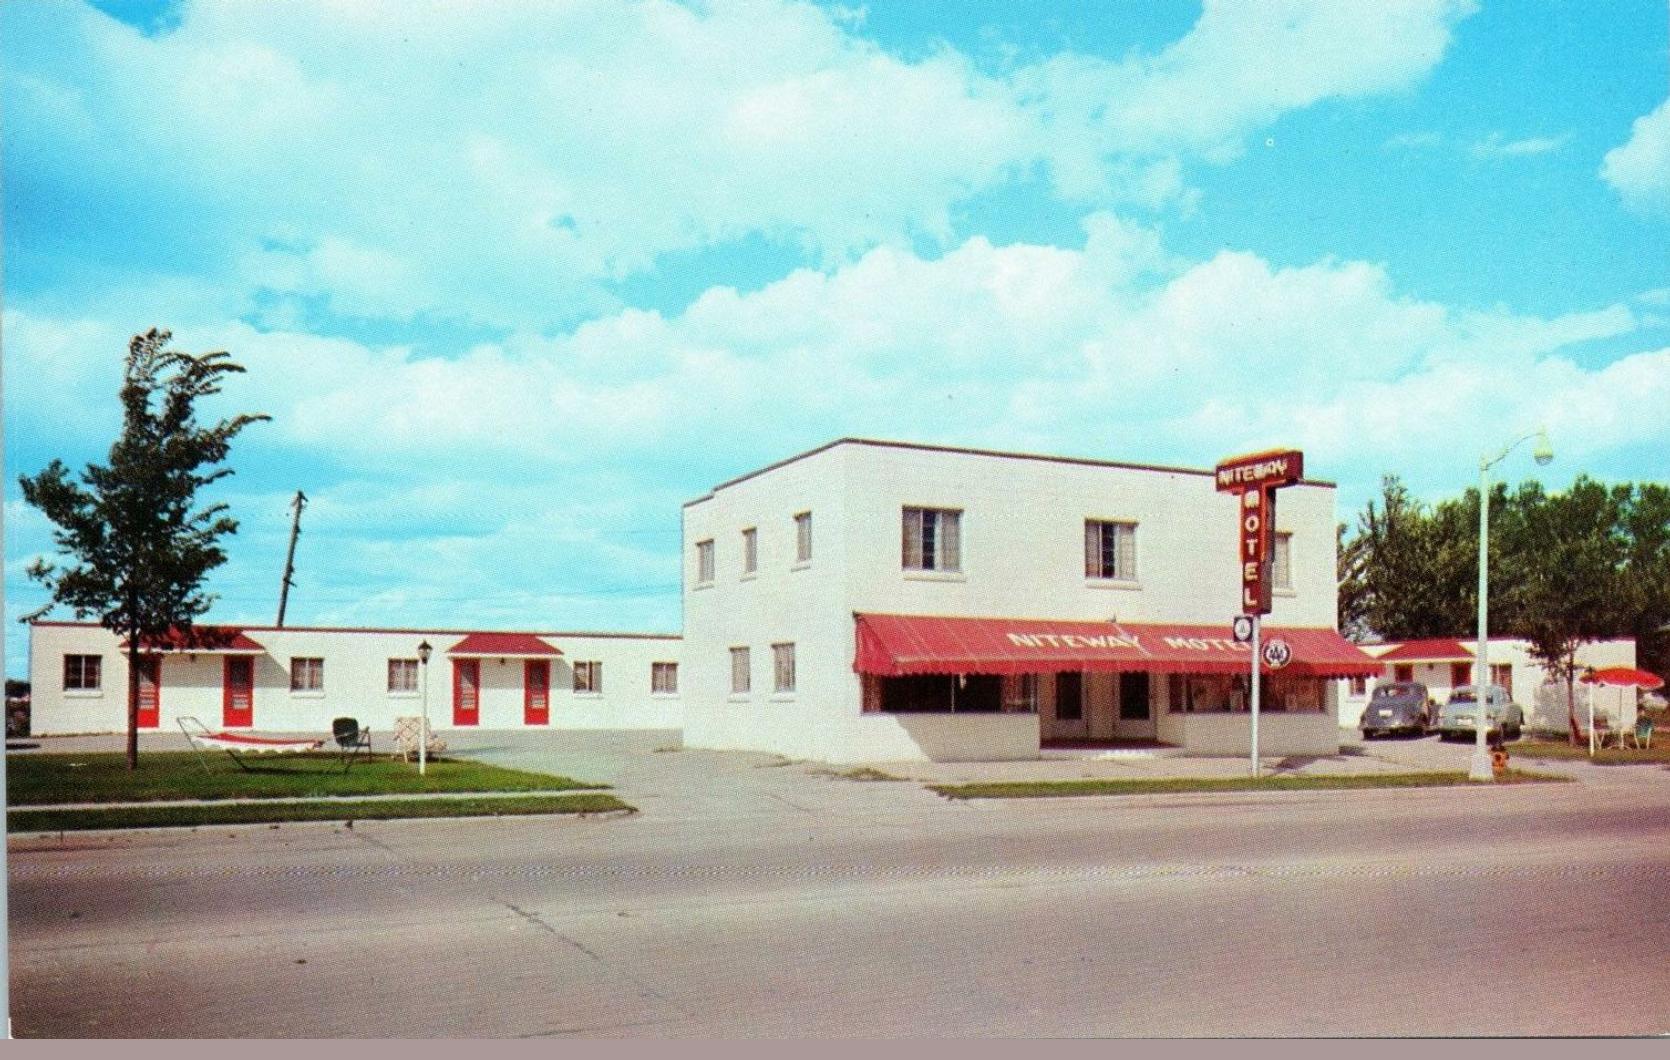 Niteway Motel